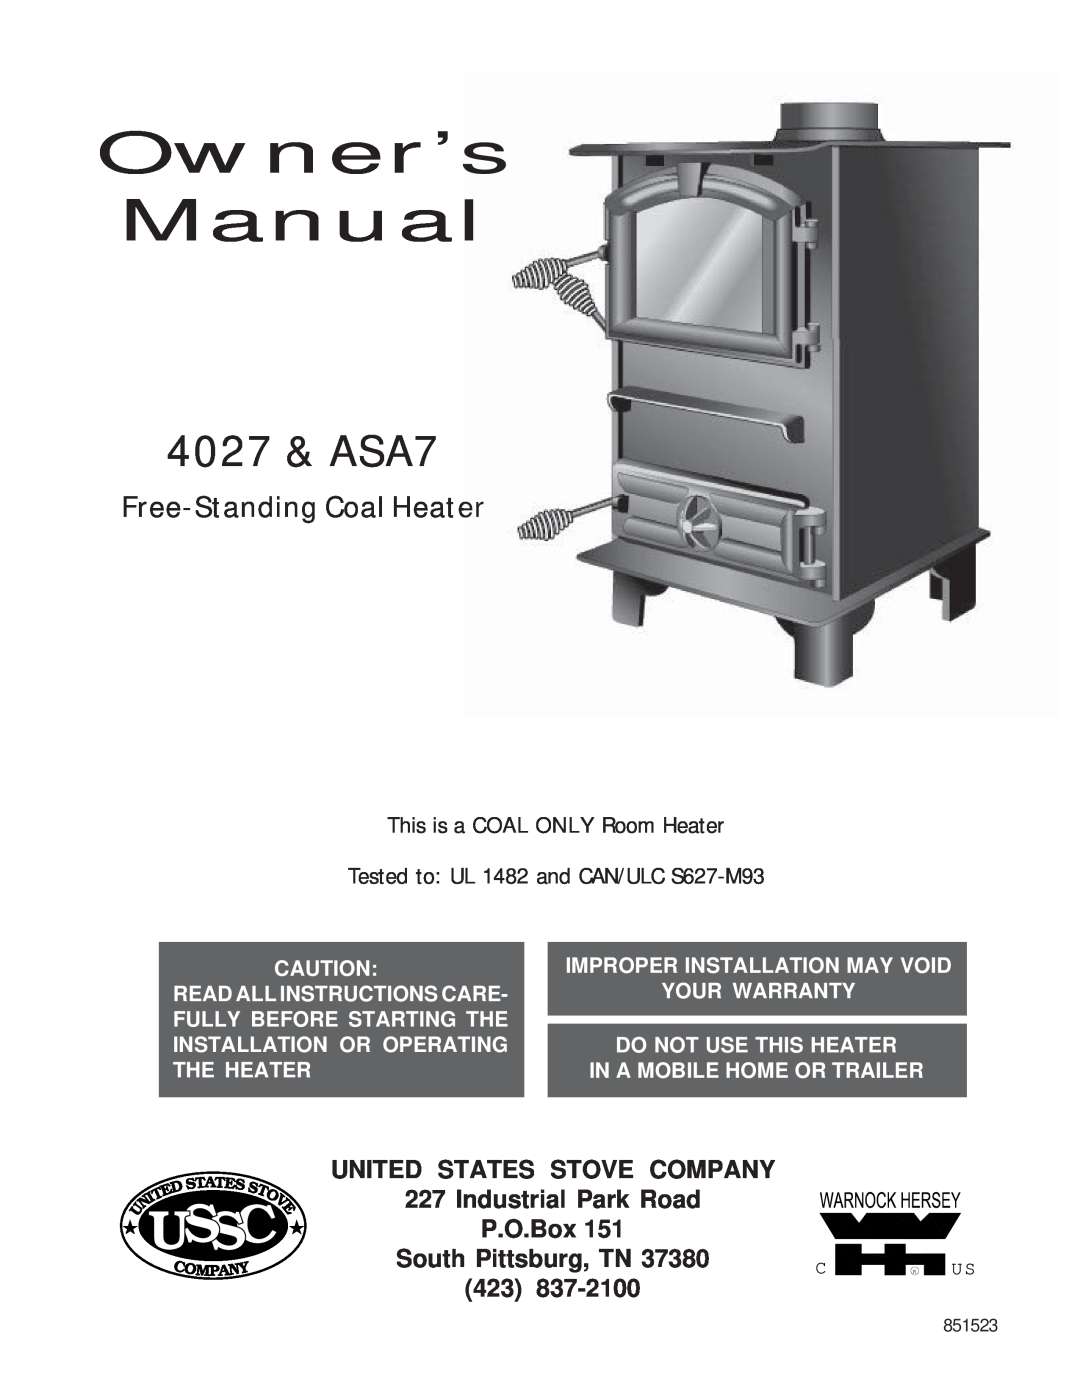 United States Stove owner manual United States Stove Company, Ussc, 4027 & ASA7, Free-StandingCoal Heater, P.O.Box 